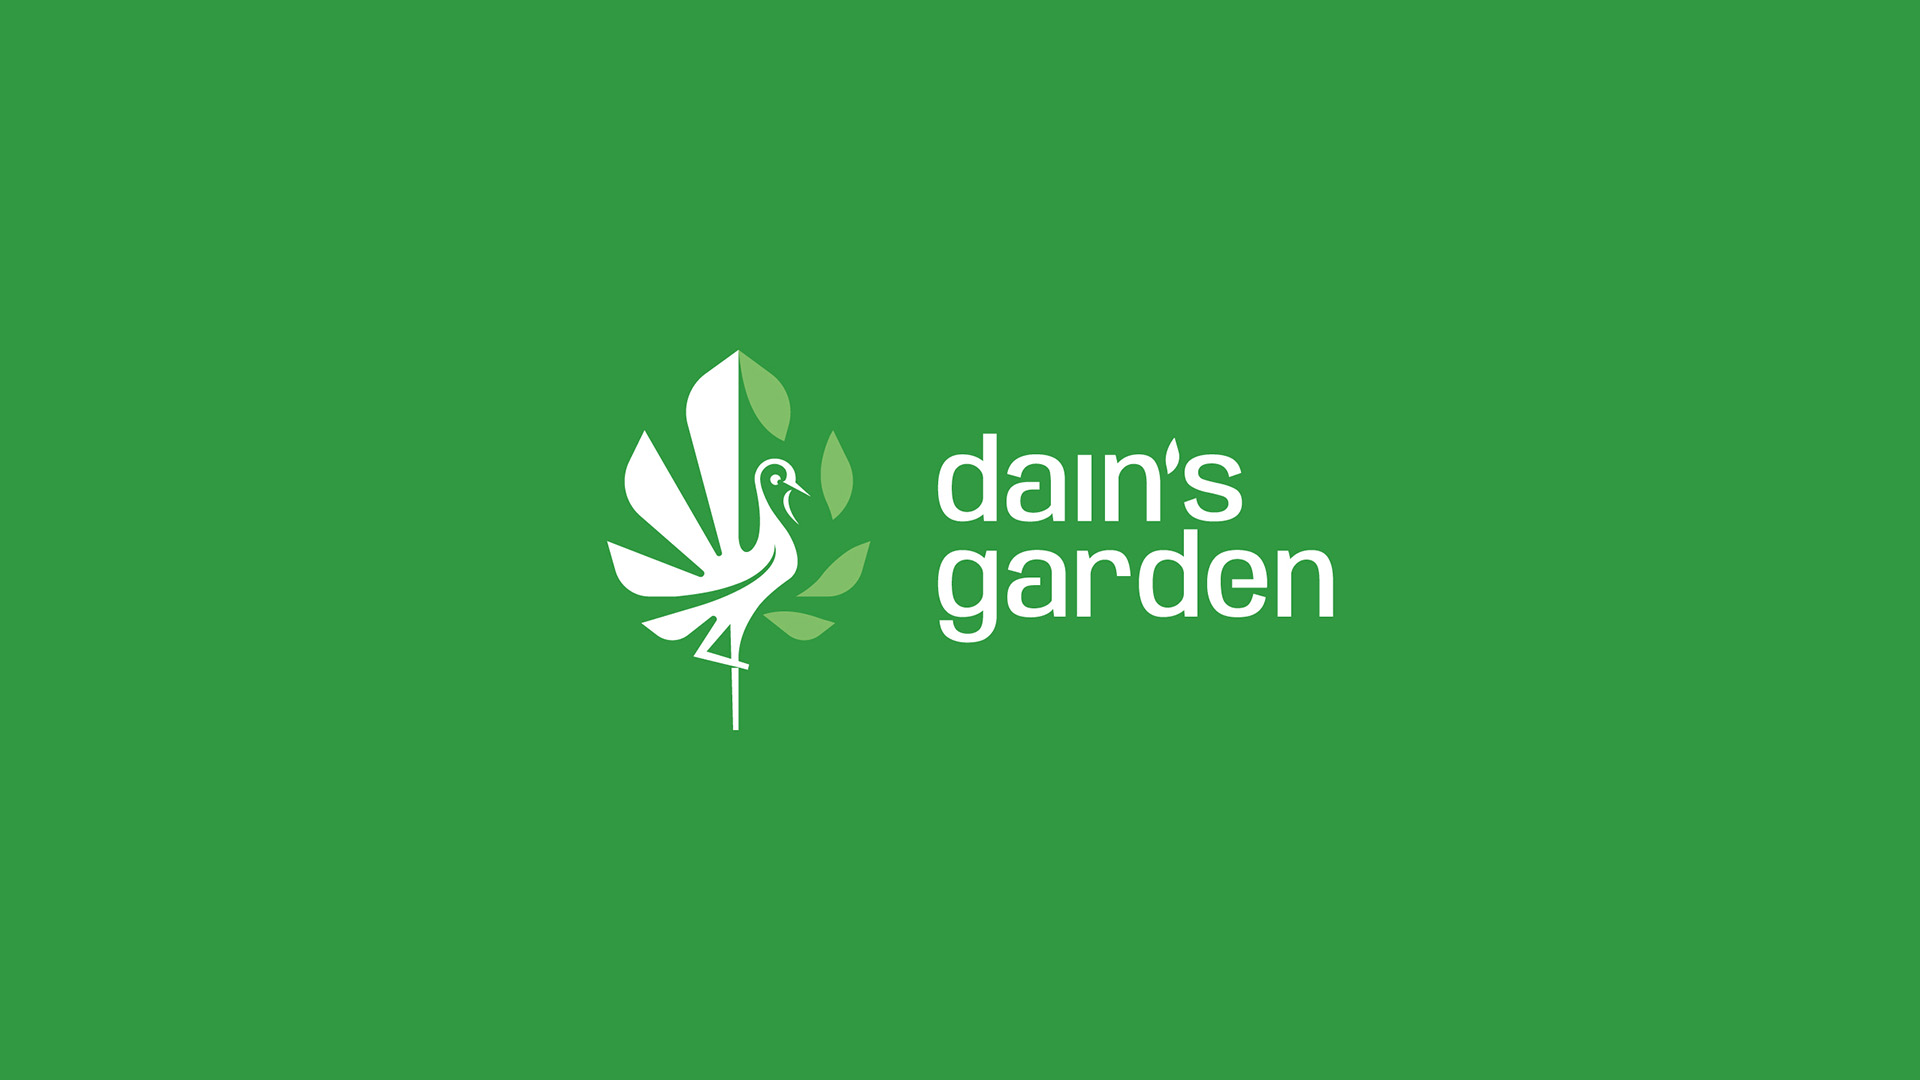 Bird - Dain's garden - Logo Inspiration